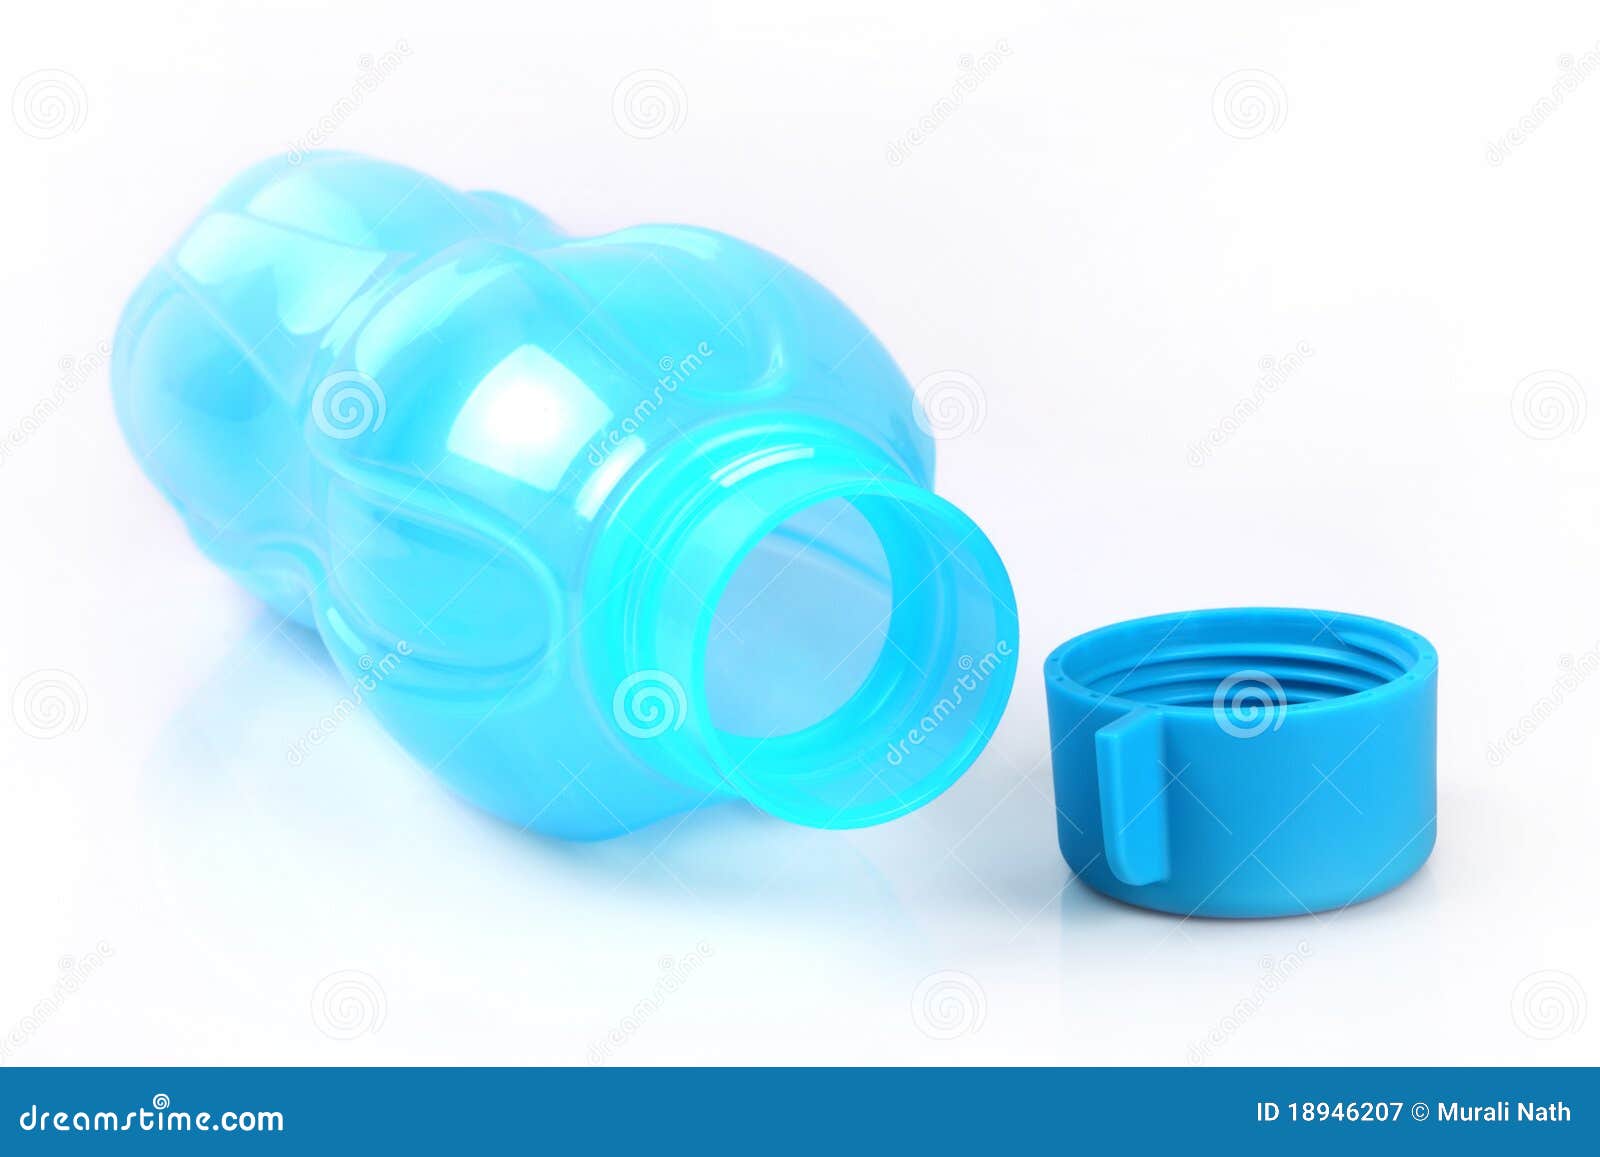 Empty plastic water bottle Stock Photo by ©membio 43340425